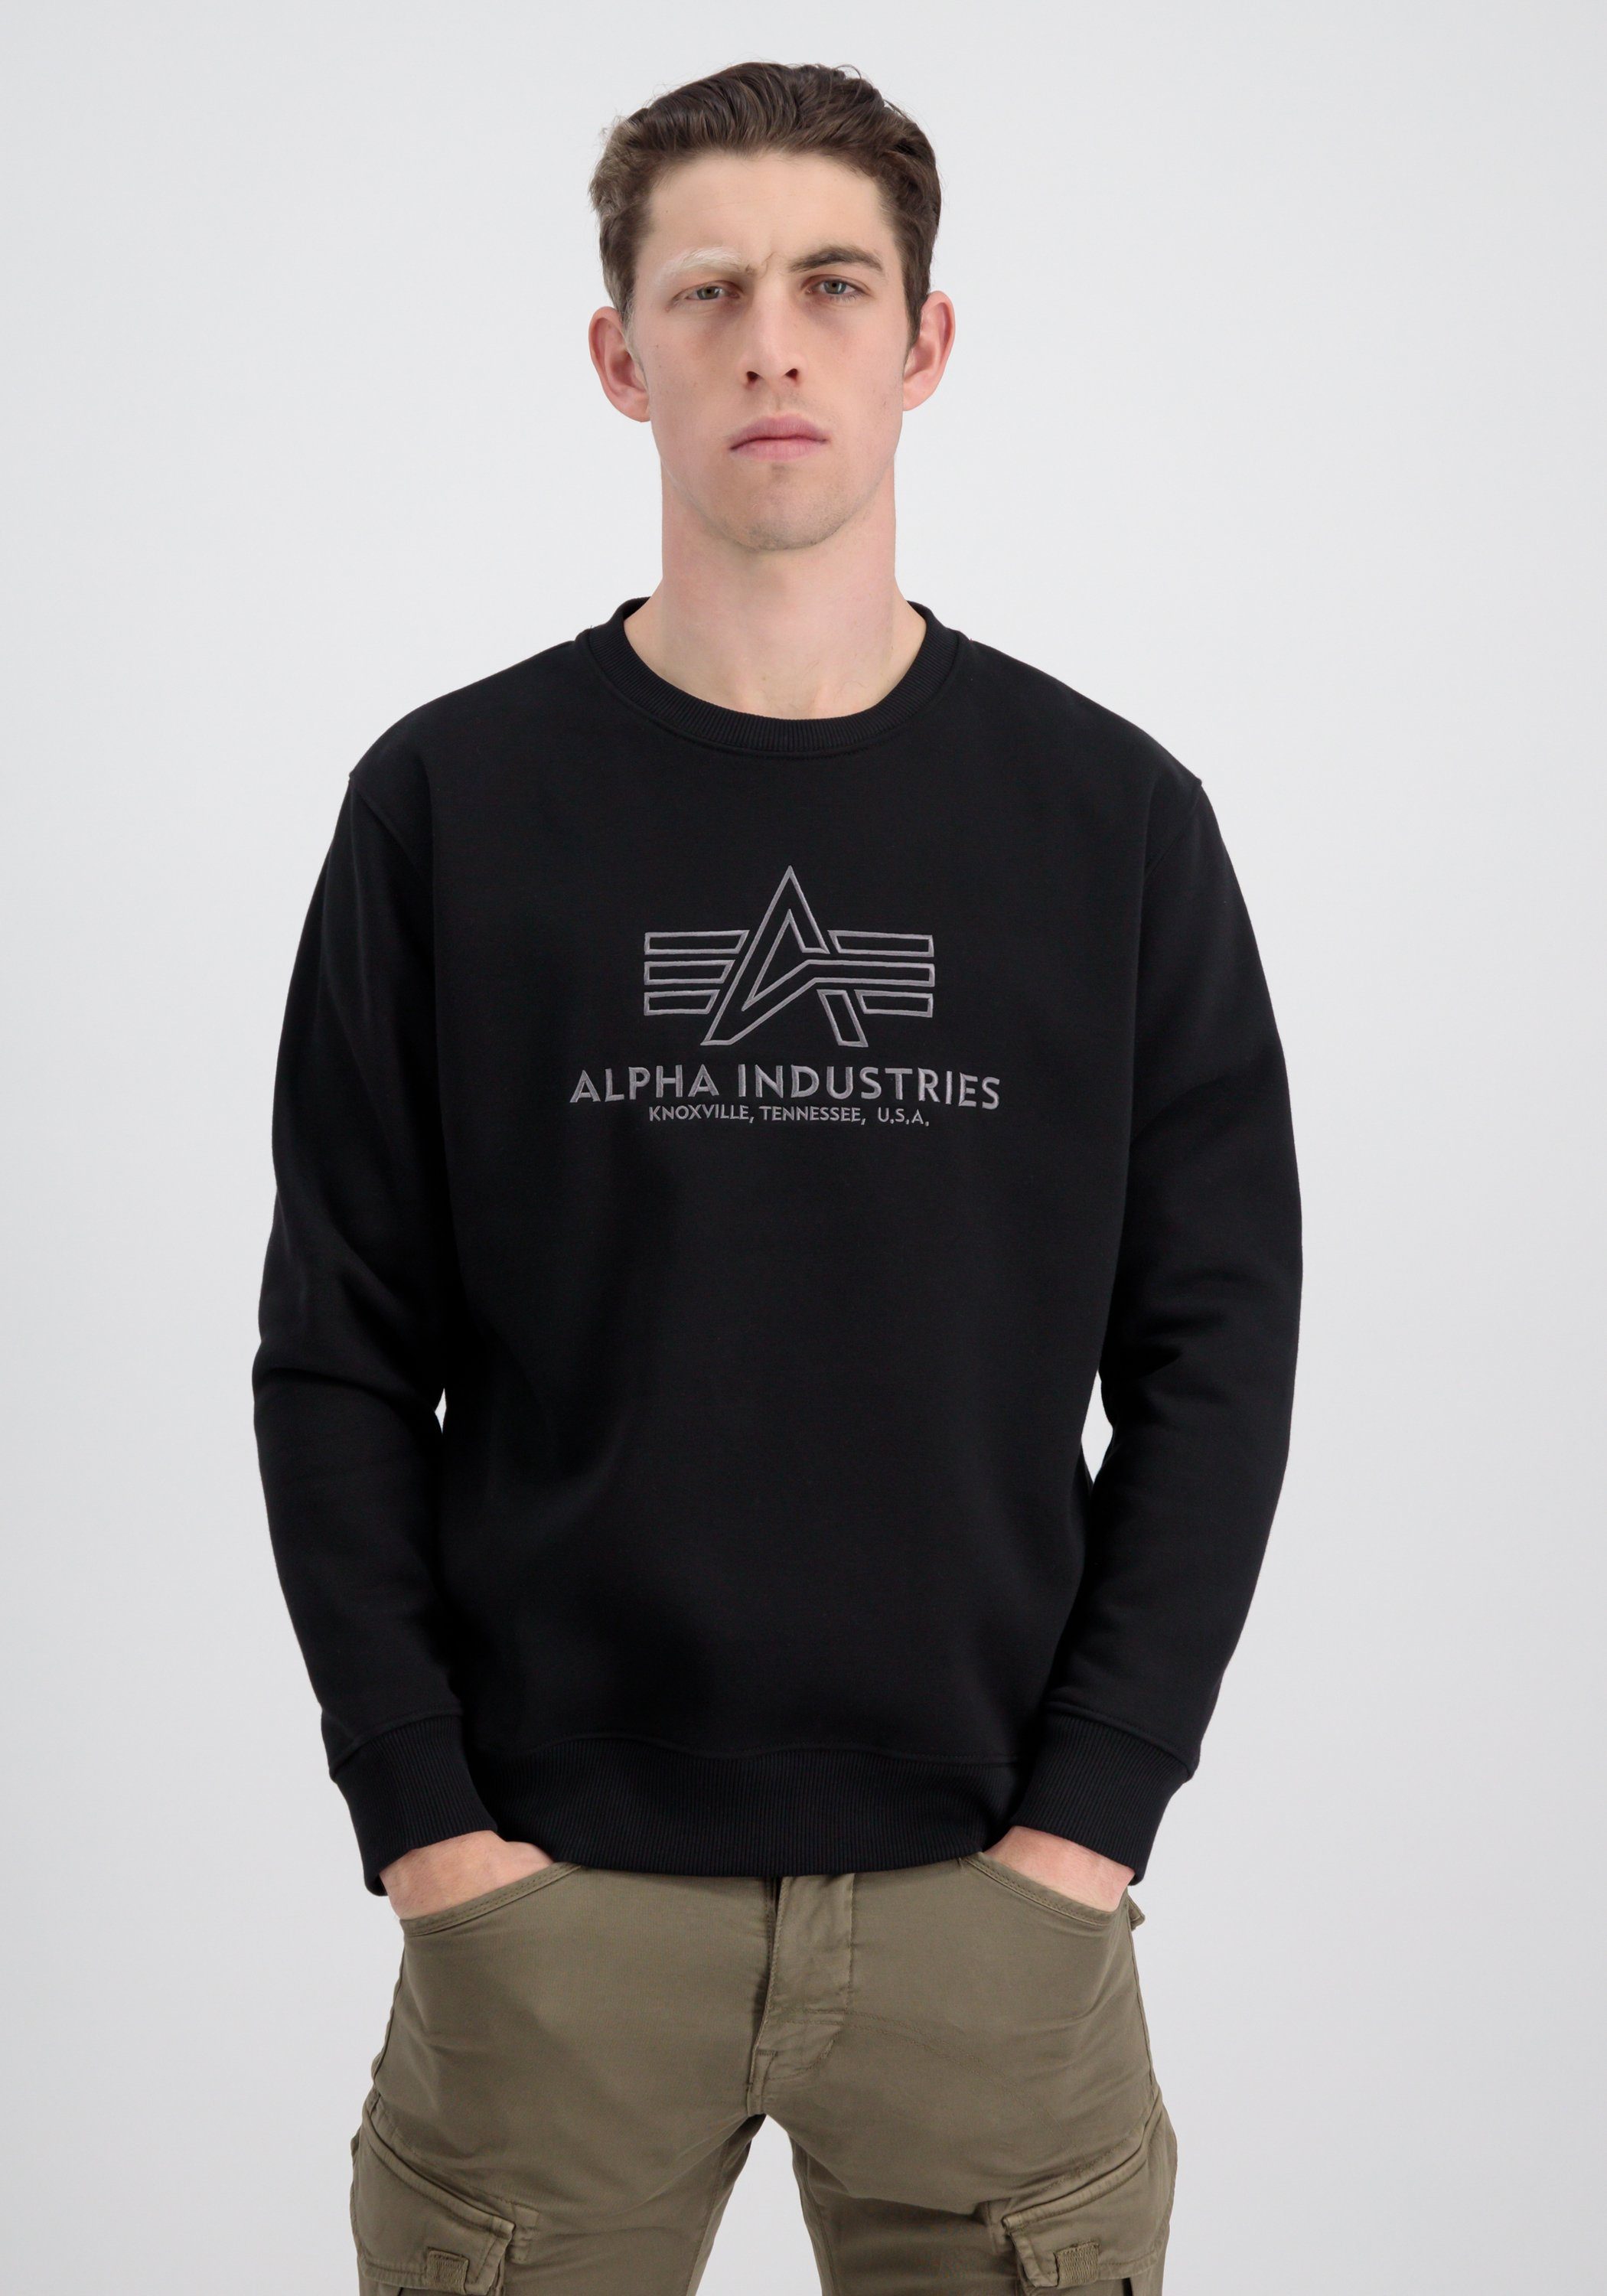 gun Men Alpha Alpha Sweatshirts / Sweater black Basic Industries Embroidery Sweater Industries - metal